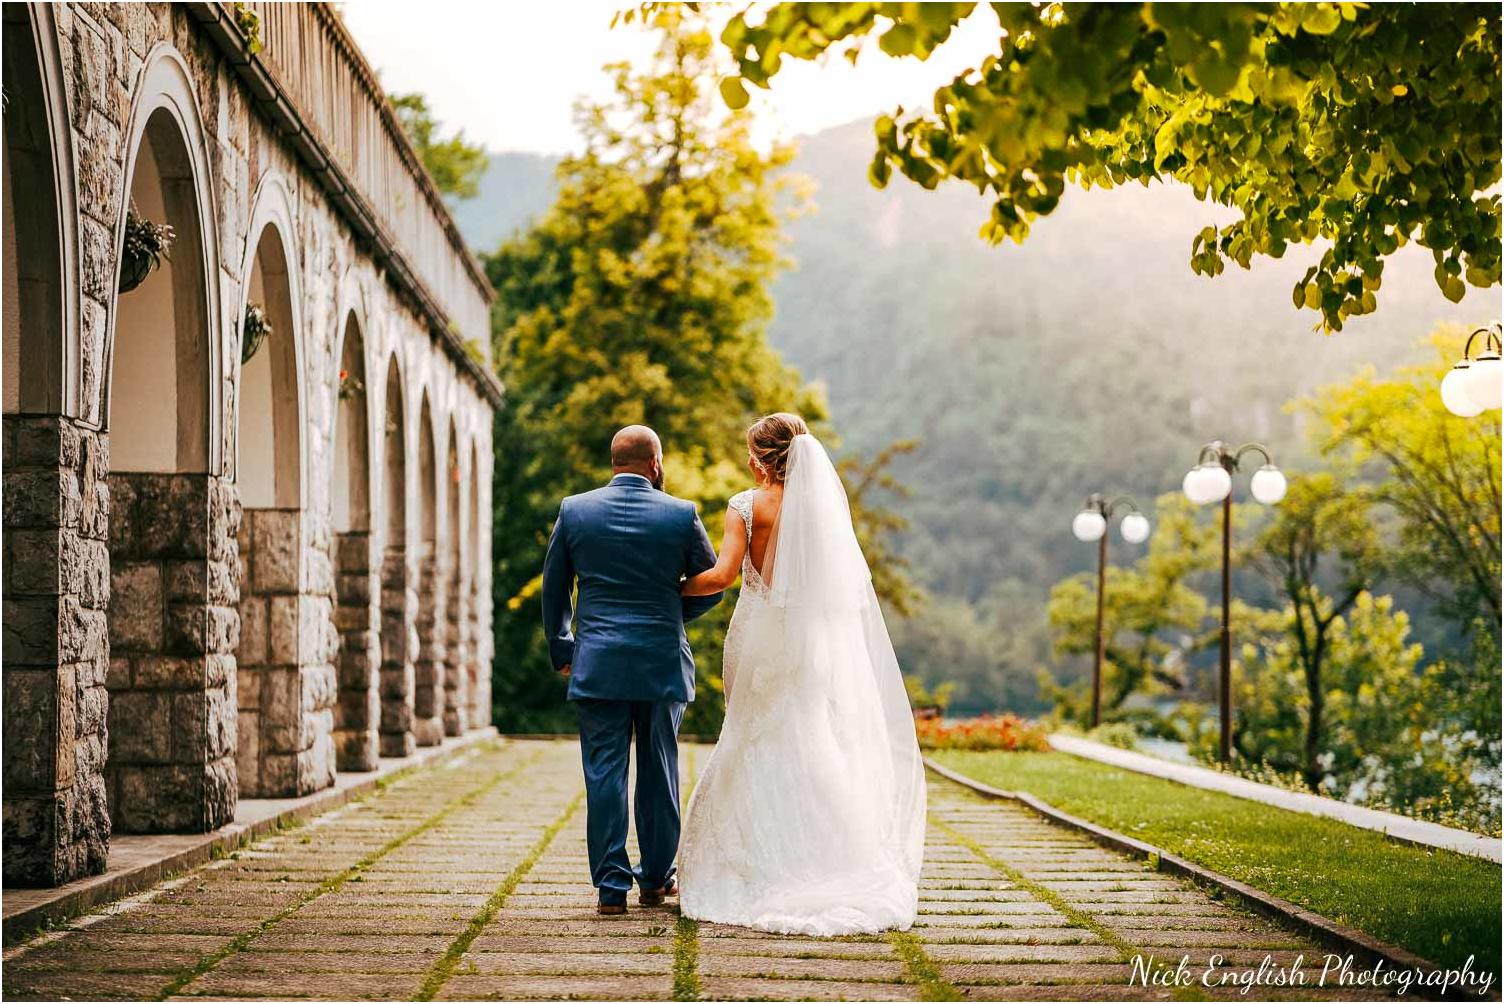 Destination_Wedding_Photographer_Slovenia_Nick_English_Photography-69.jpg